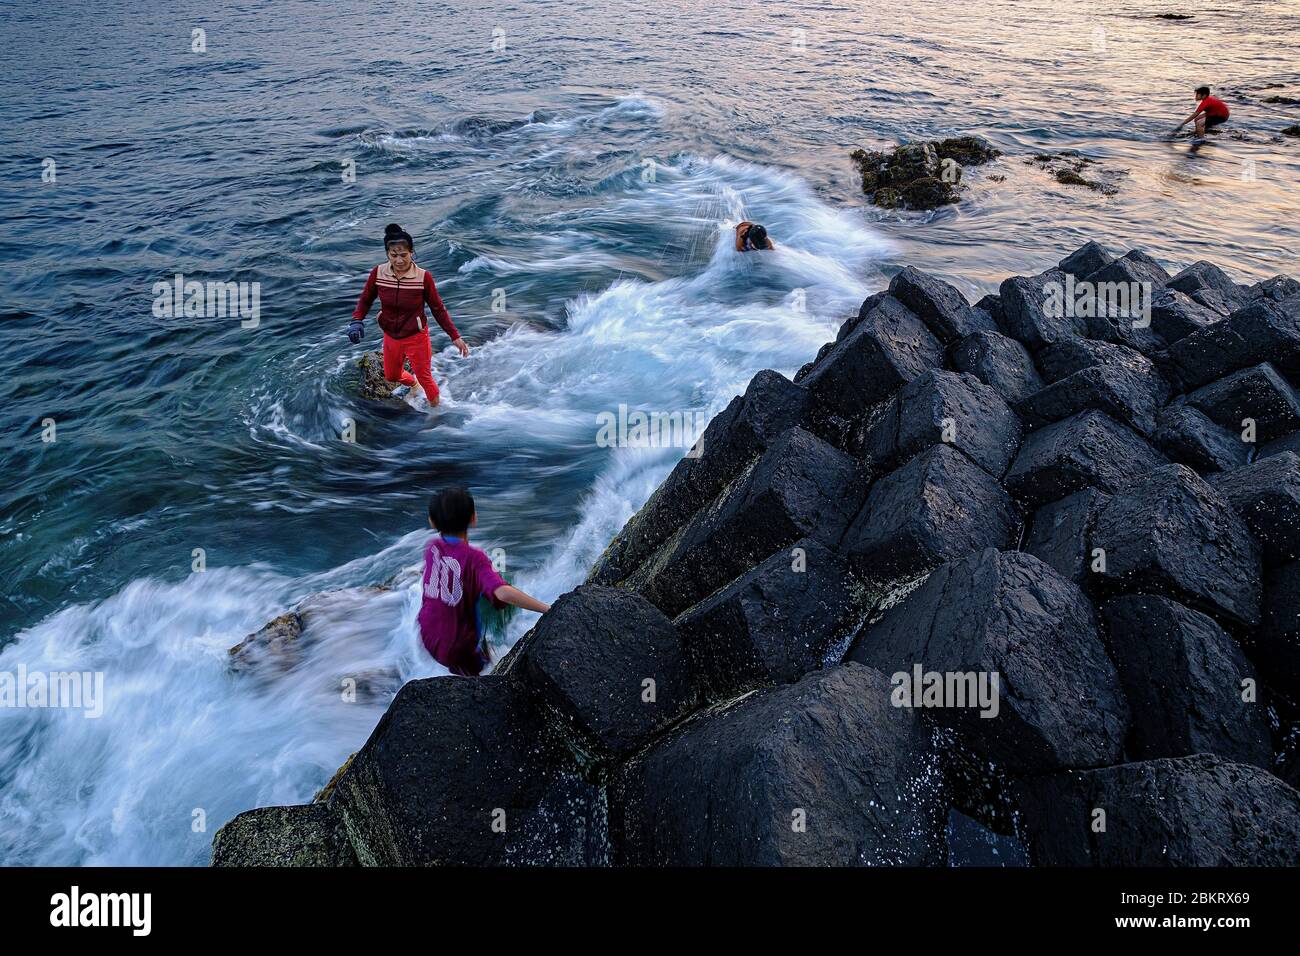 Vietnam, Phu Yen province, Ganh Da Dia, basalt rock columns, the vietnamese Giant's causeway, harvesting seaweed for selling Stock Photo